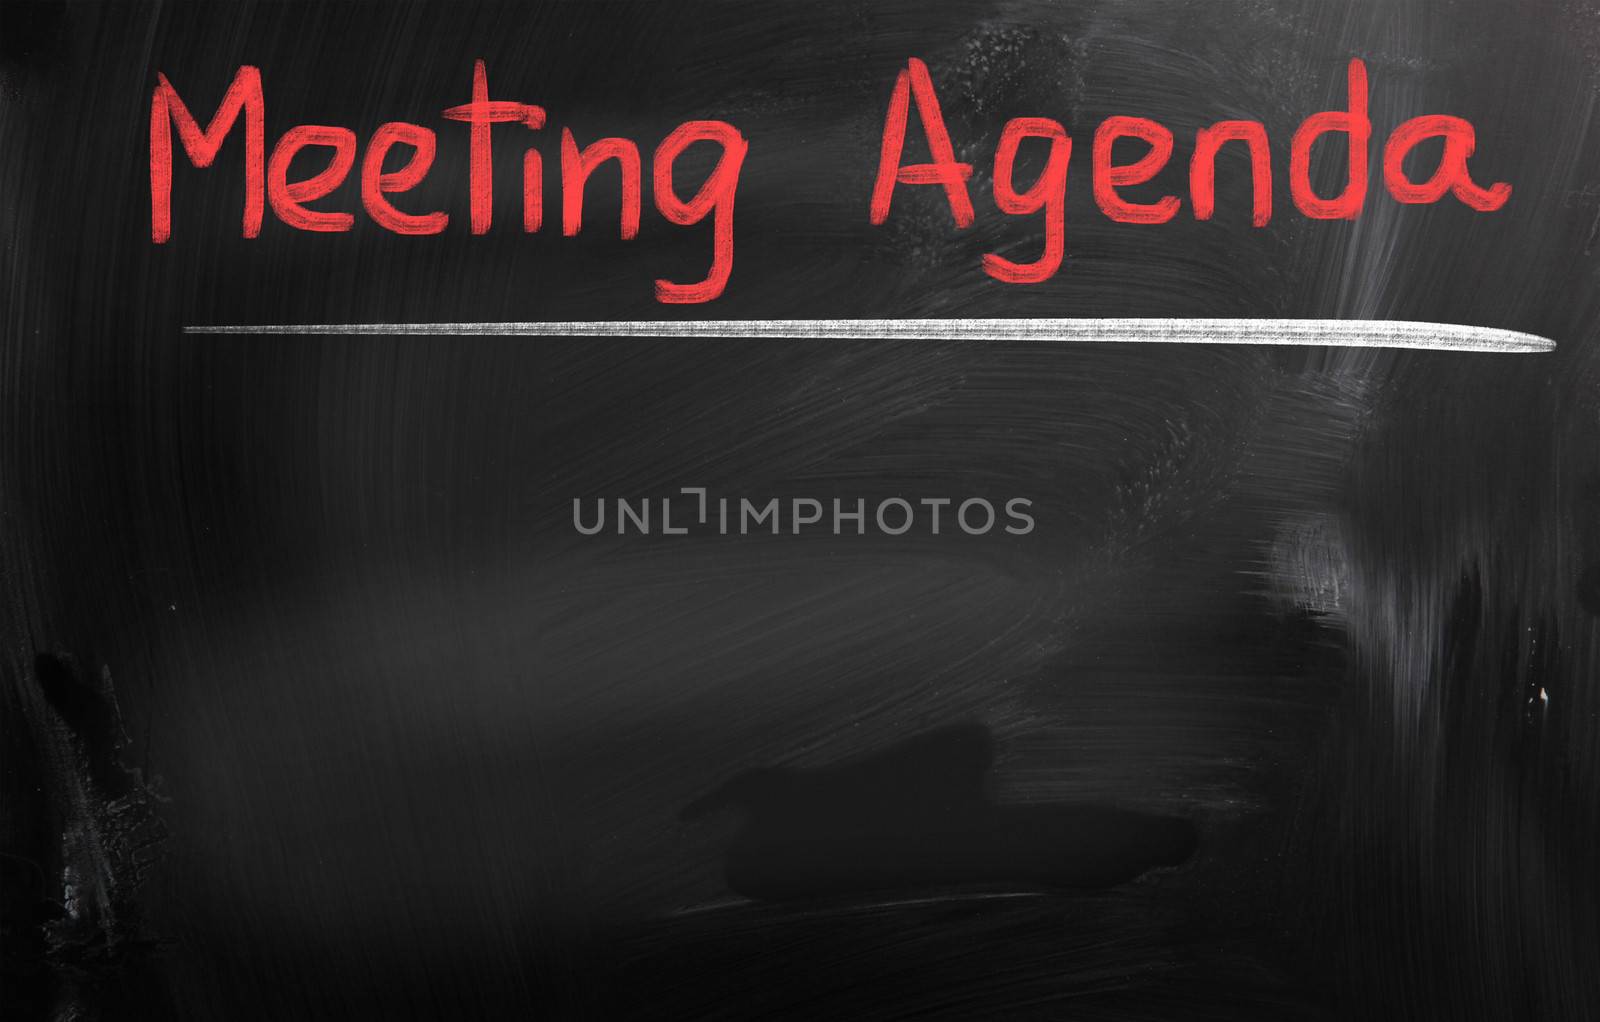 Meeting Agenda Concept